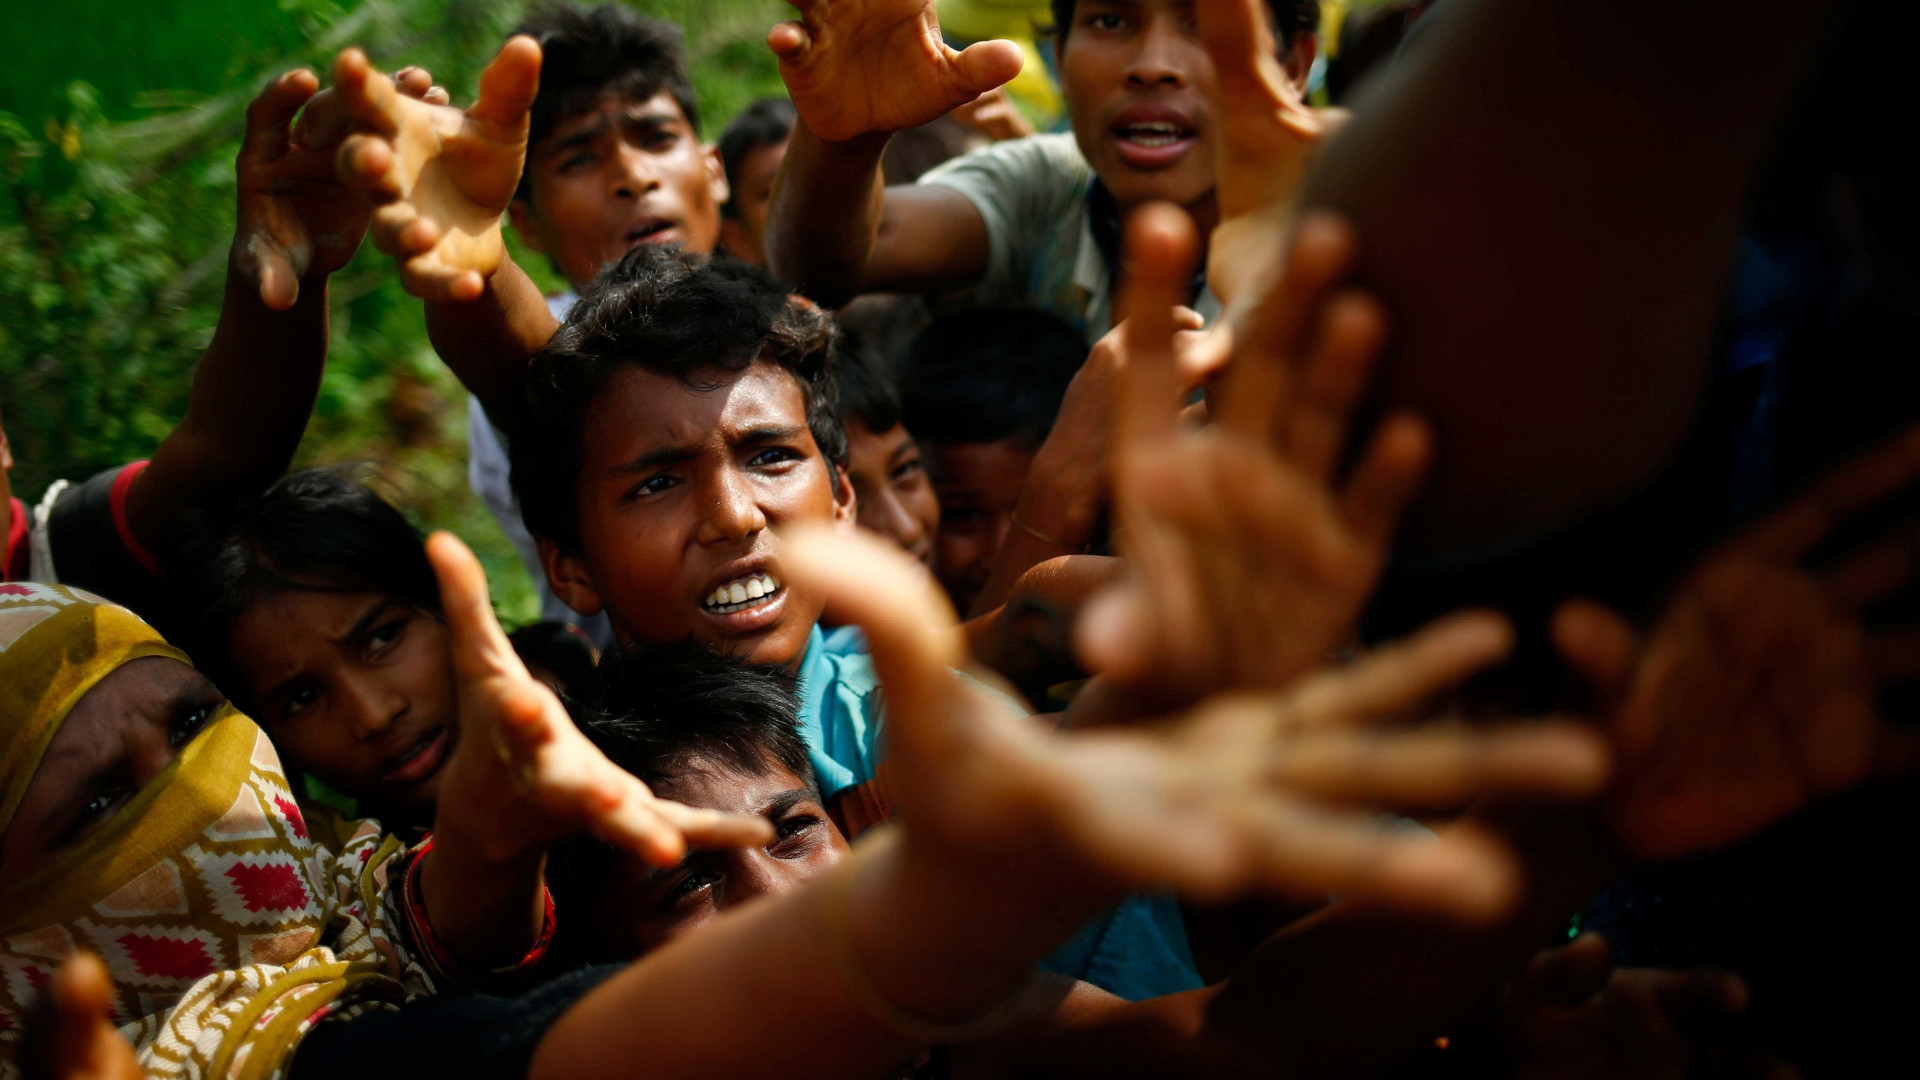 Crise em Myanmar já afeta 120 mil rohingyas, denuncia ONU